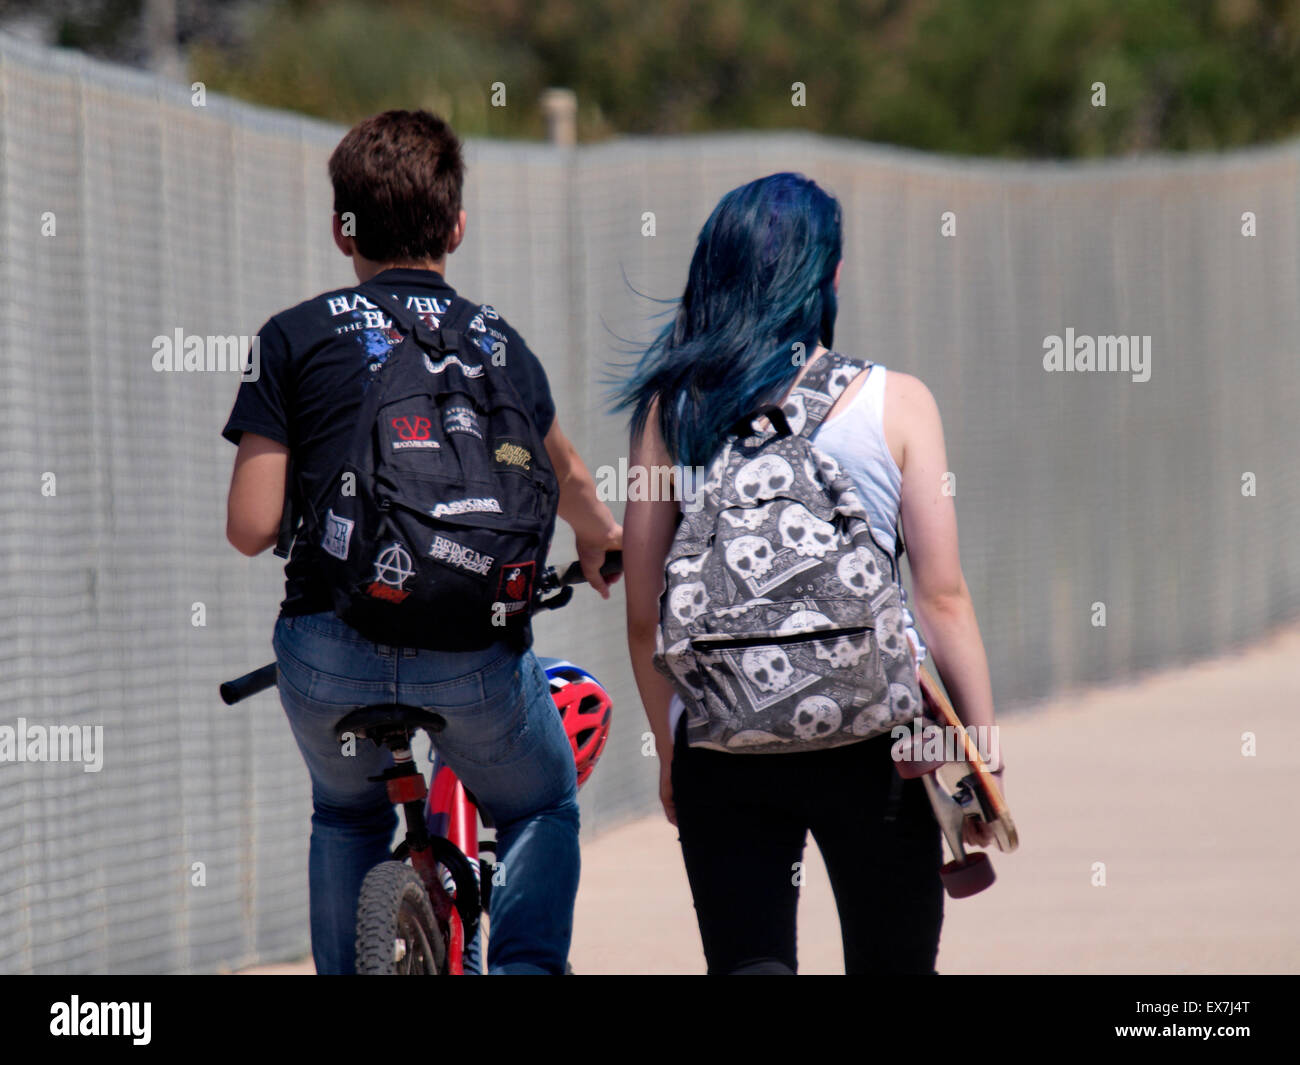 Teenage couple from behind, UK Stock Photo